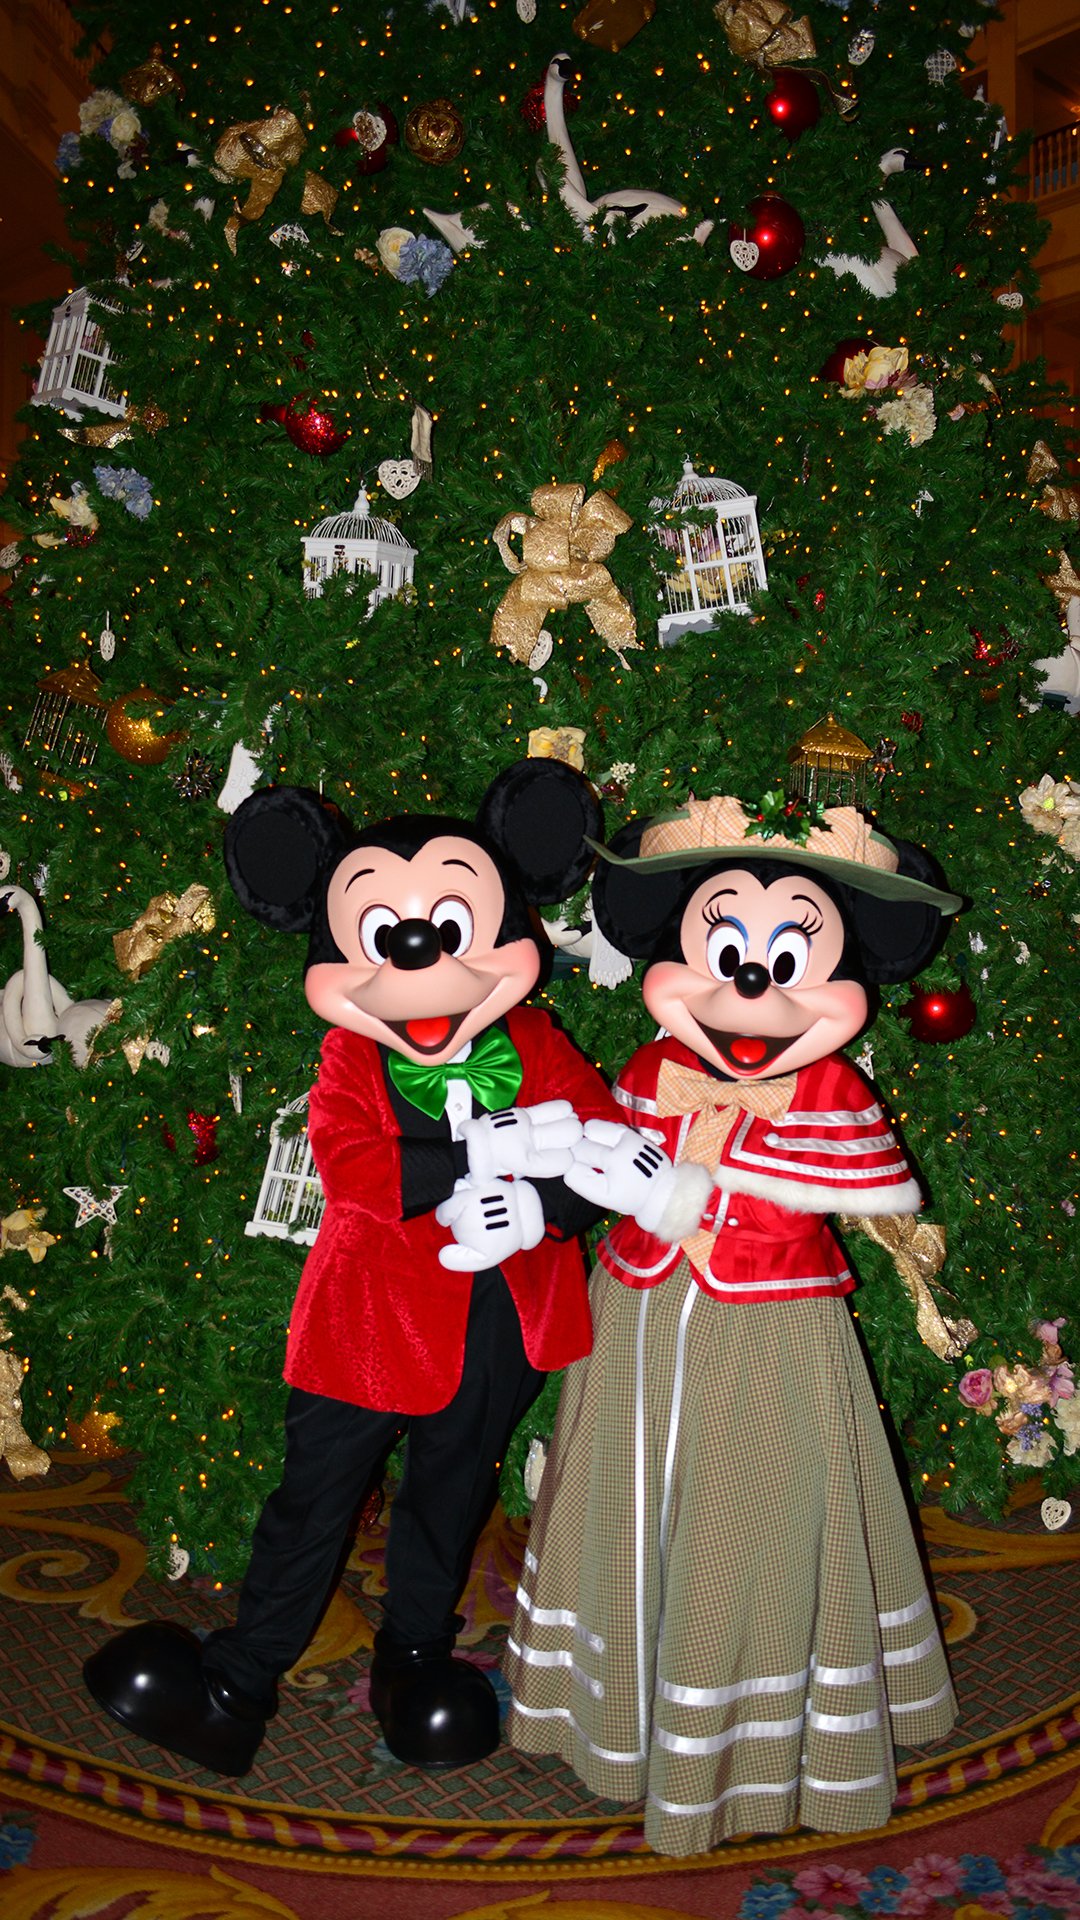 Walt Disney World Grand Floridian Christmas decor Christmas Characters Mickey and Minnie (42)